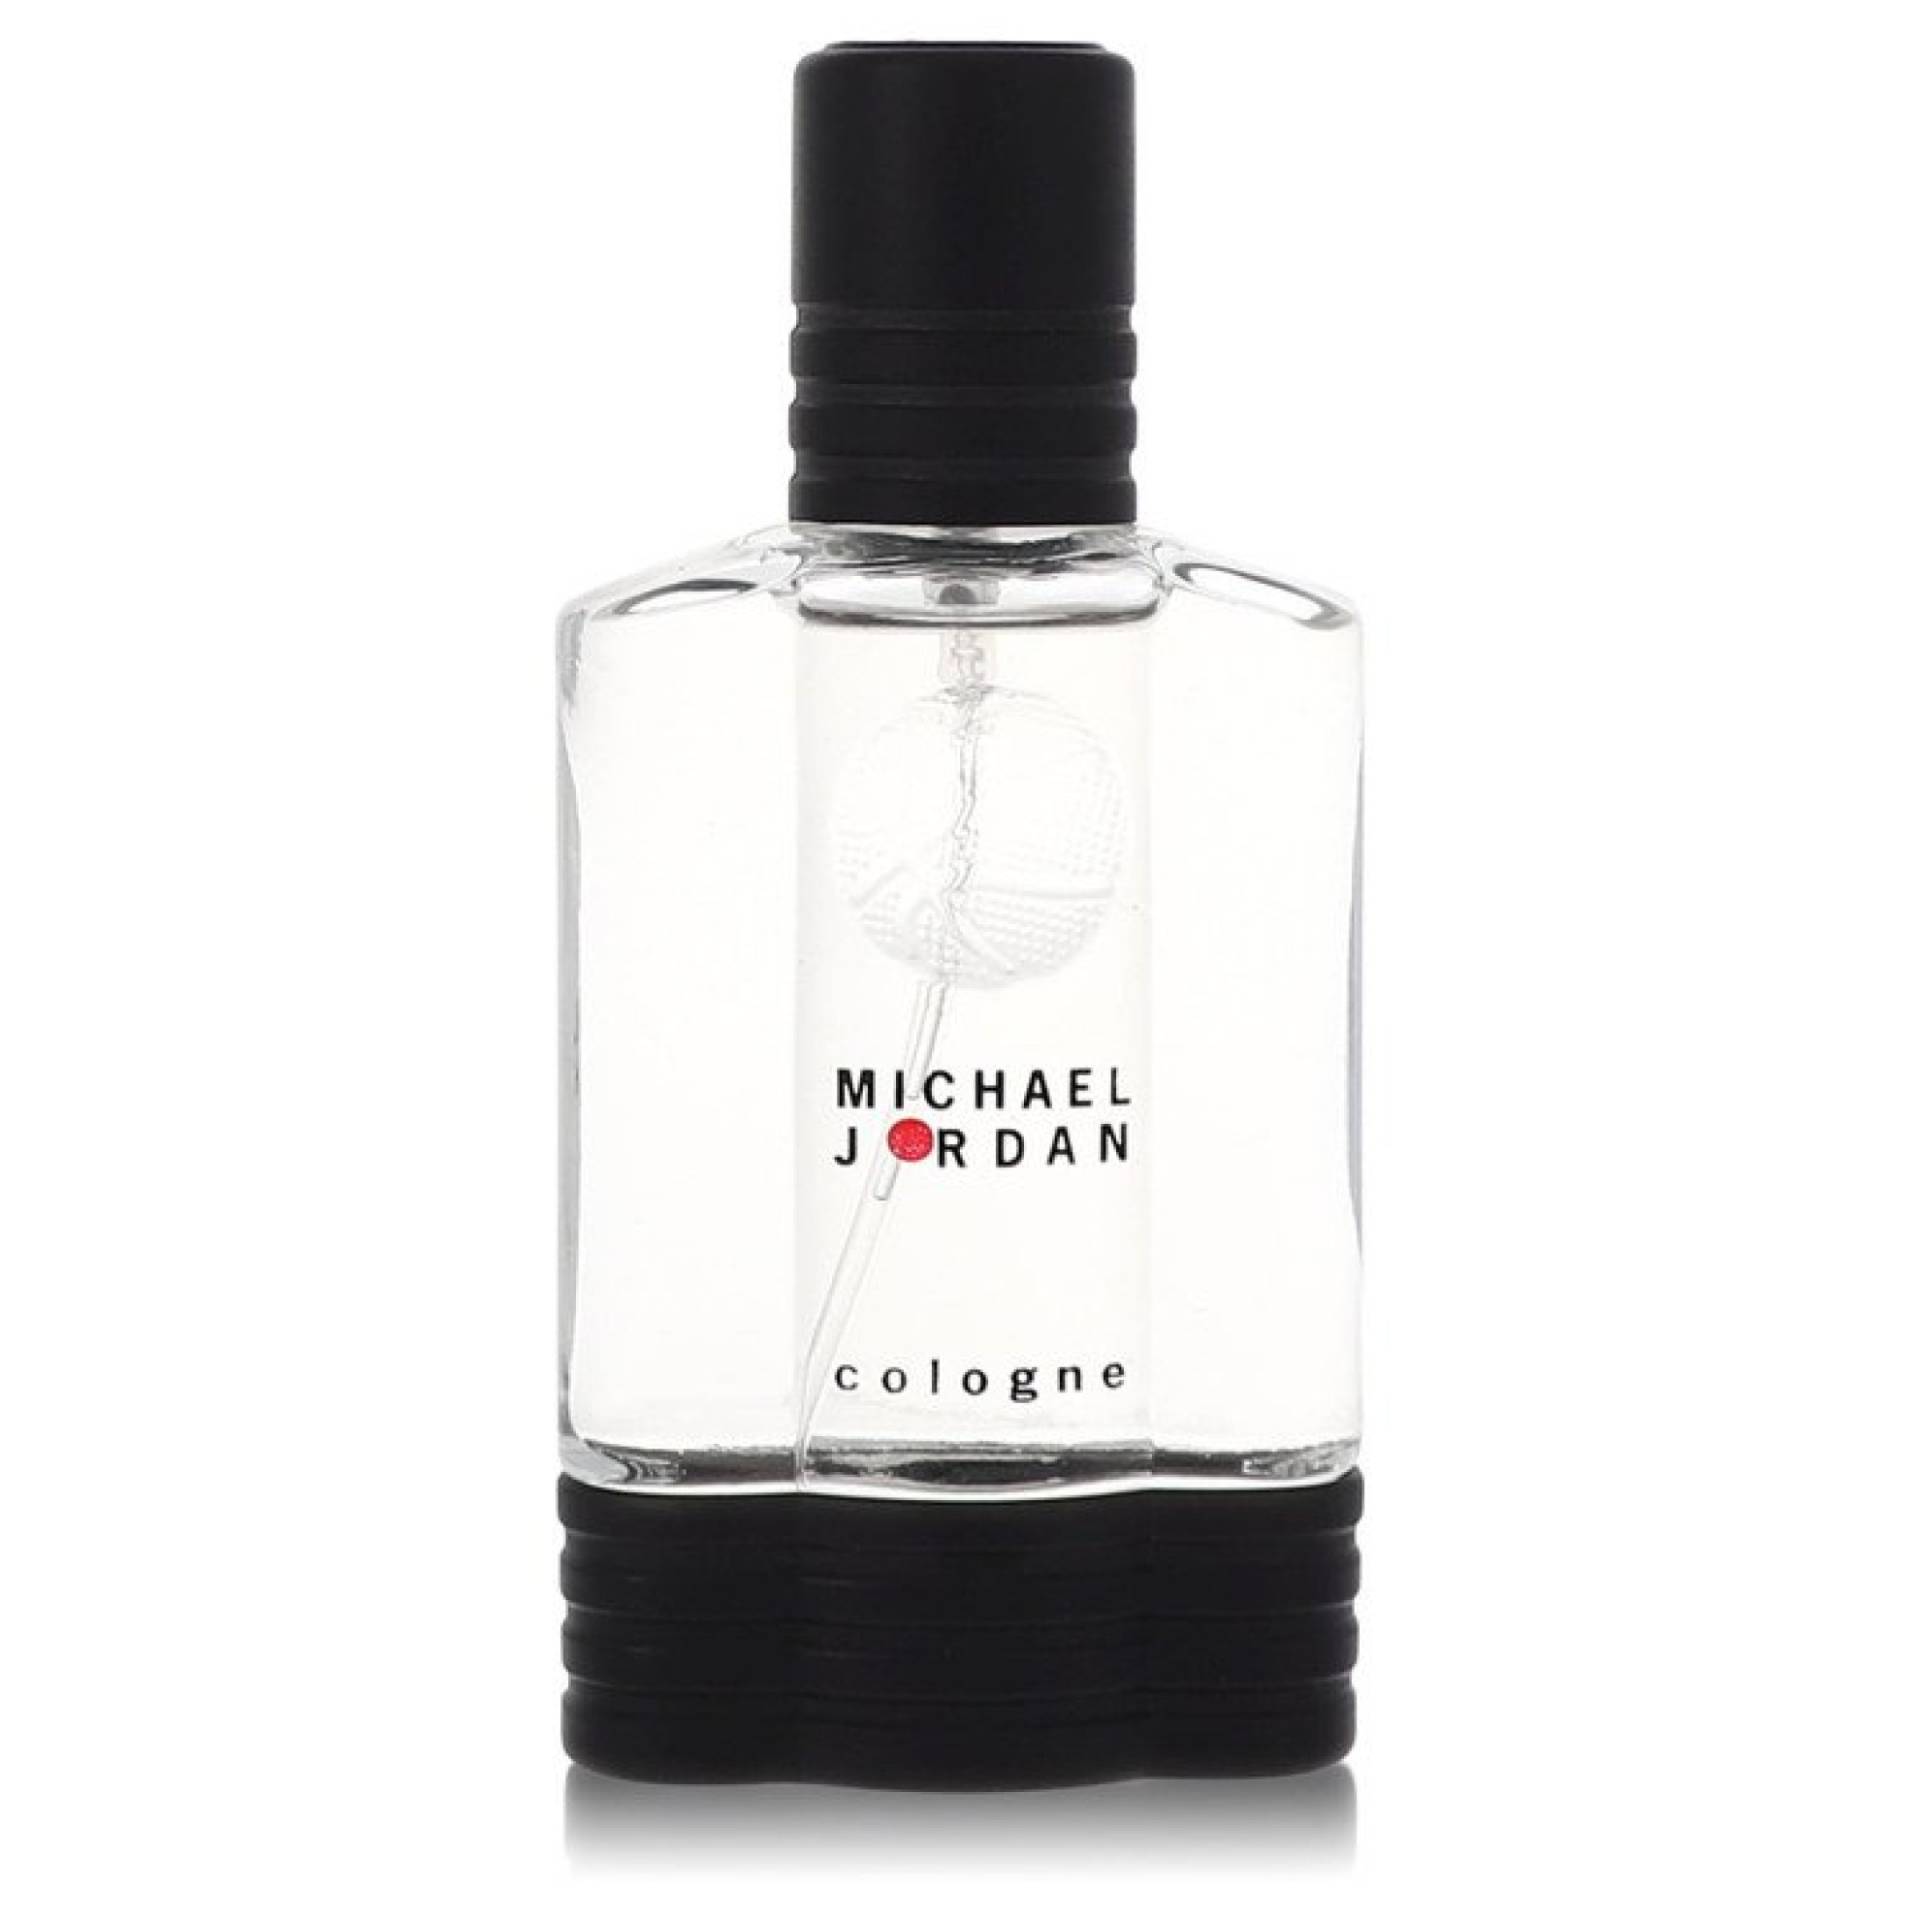 Michael Jordan MICHAEL JORDAN Cologne Spray (unboxed) 1 ml von Michael Jordan